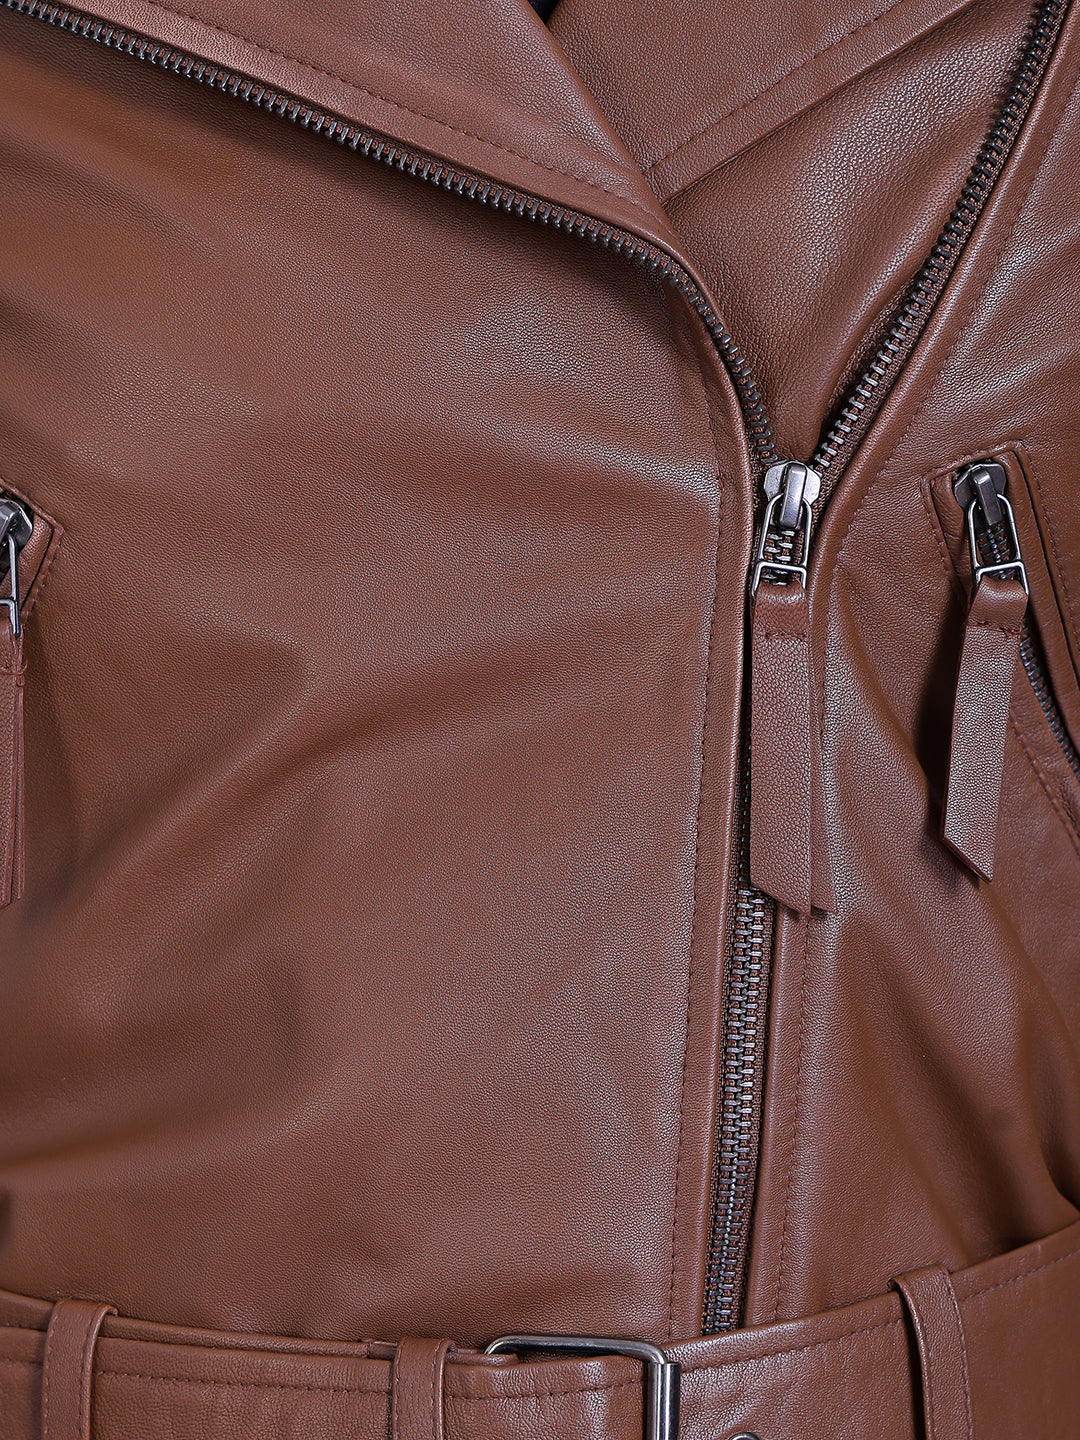 Justanned Pecan Belted Biker Leather Jacket